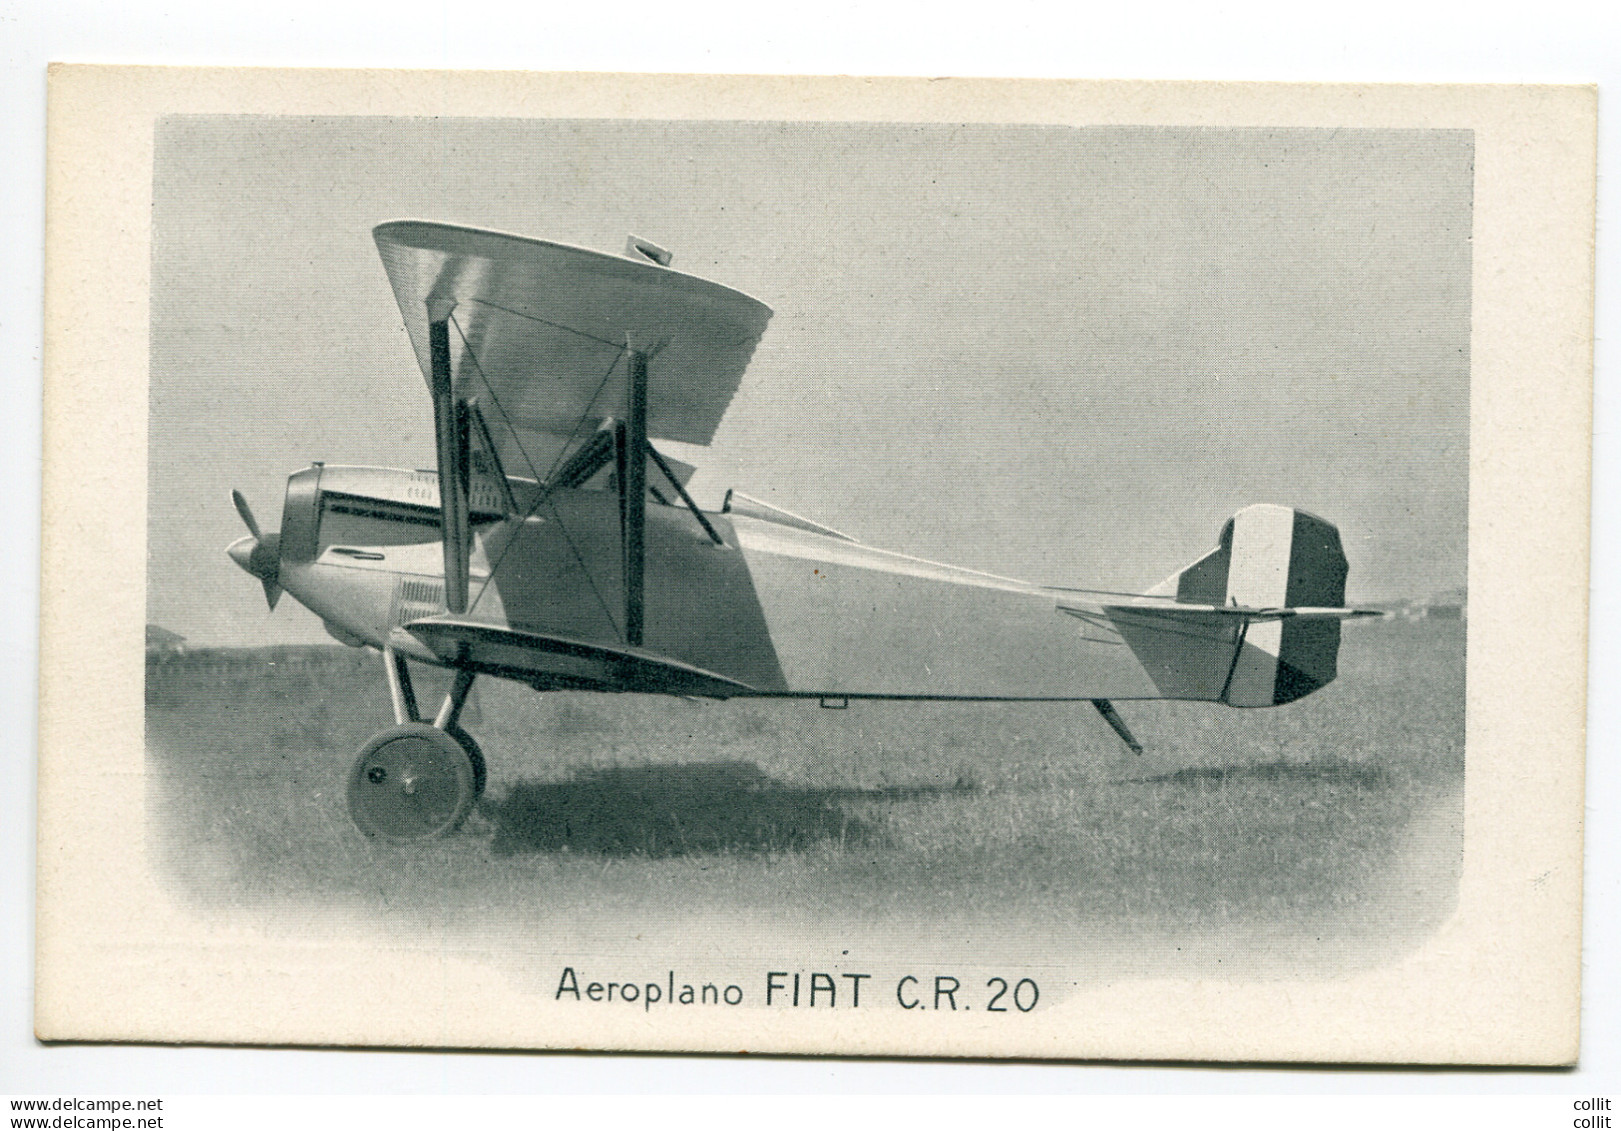 Fiat C.R. 20 - Cartolina Rappresentativa Del Velivolo - Poststempel (Flugzeuge)